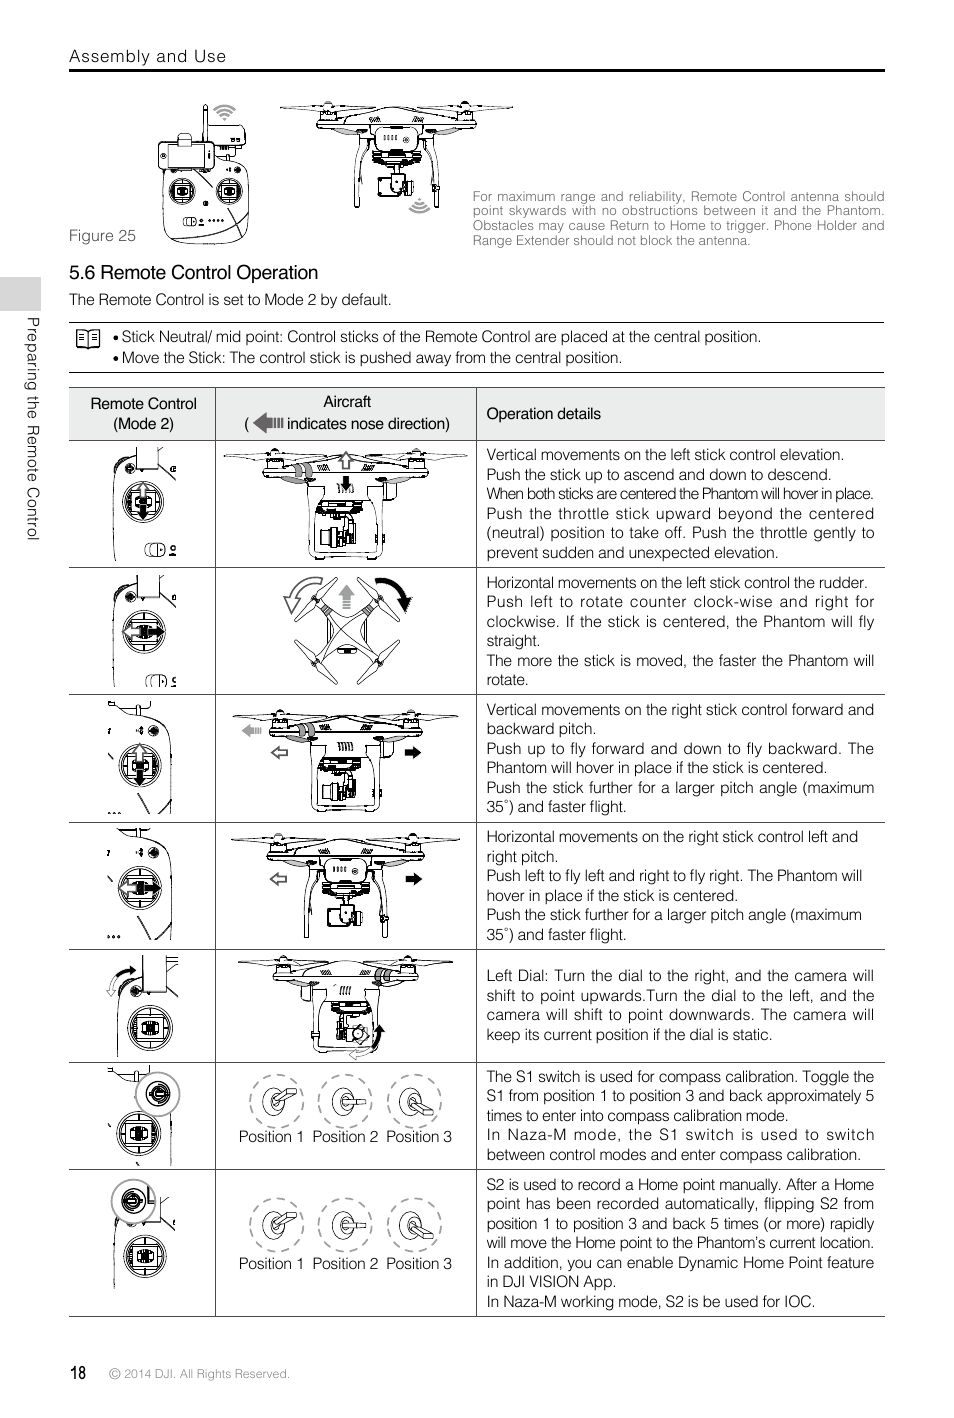 6 remote control operation | DJI Phantom 2 Vision Plus User Manual User